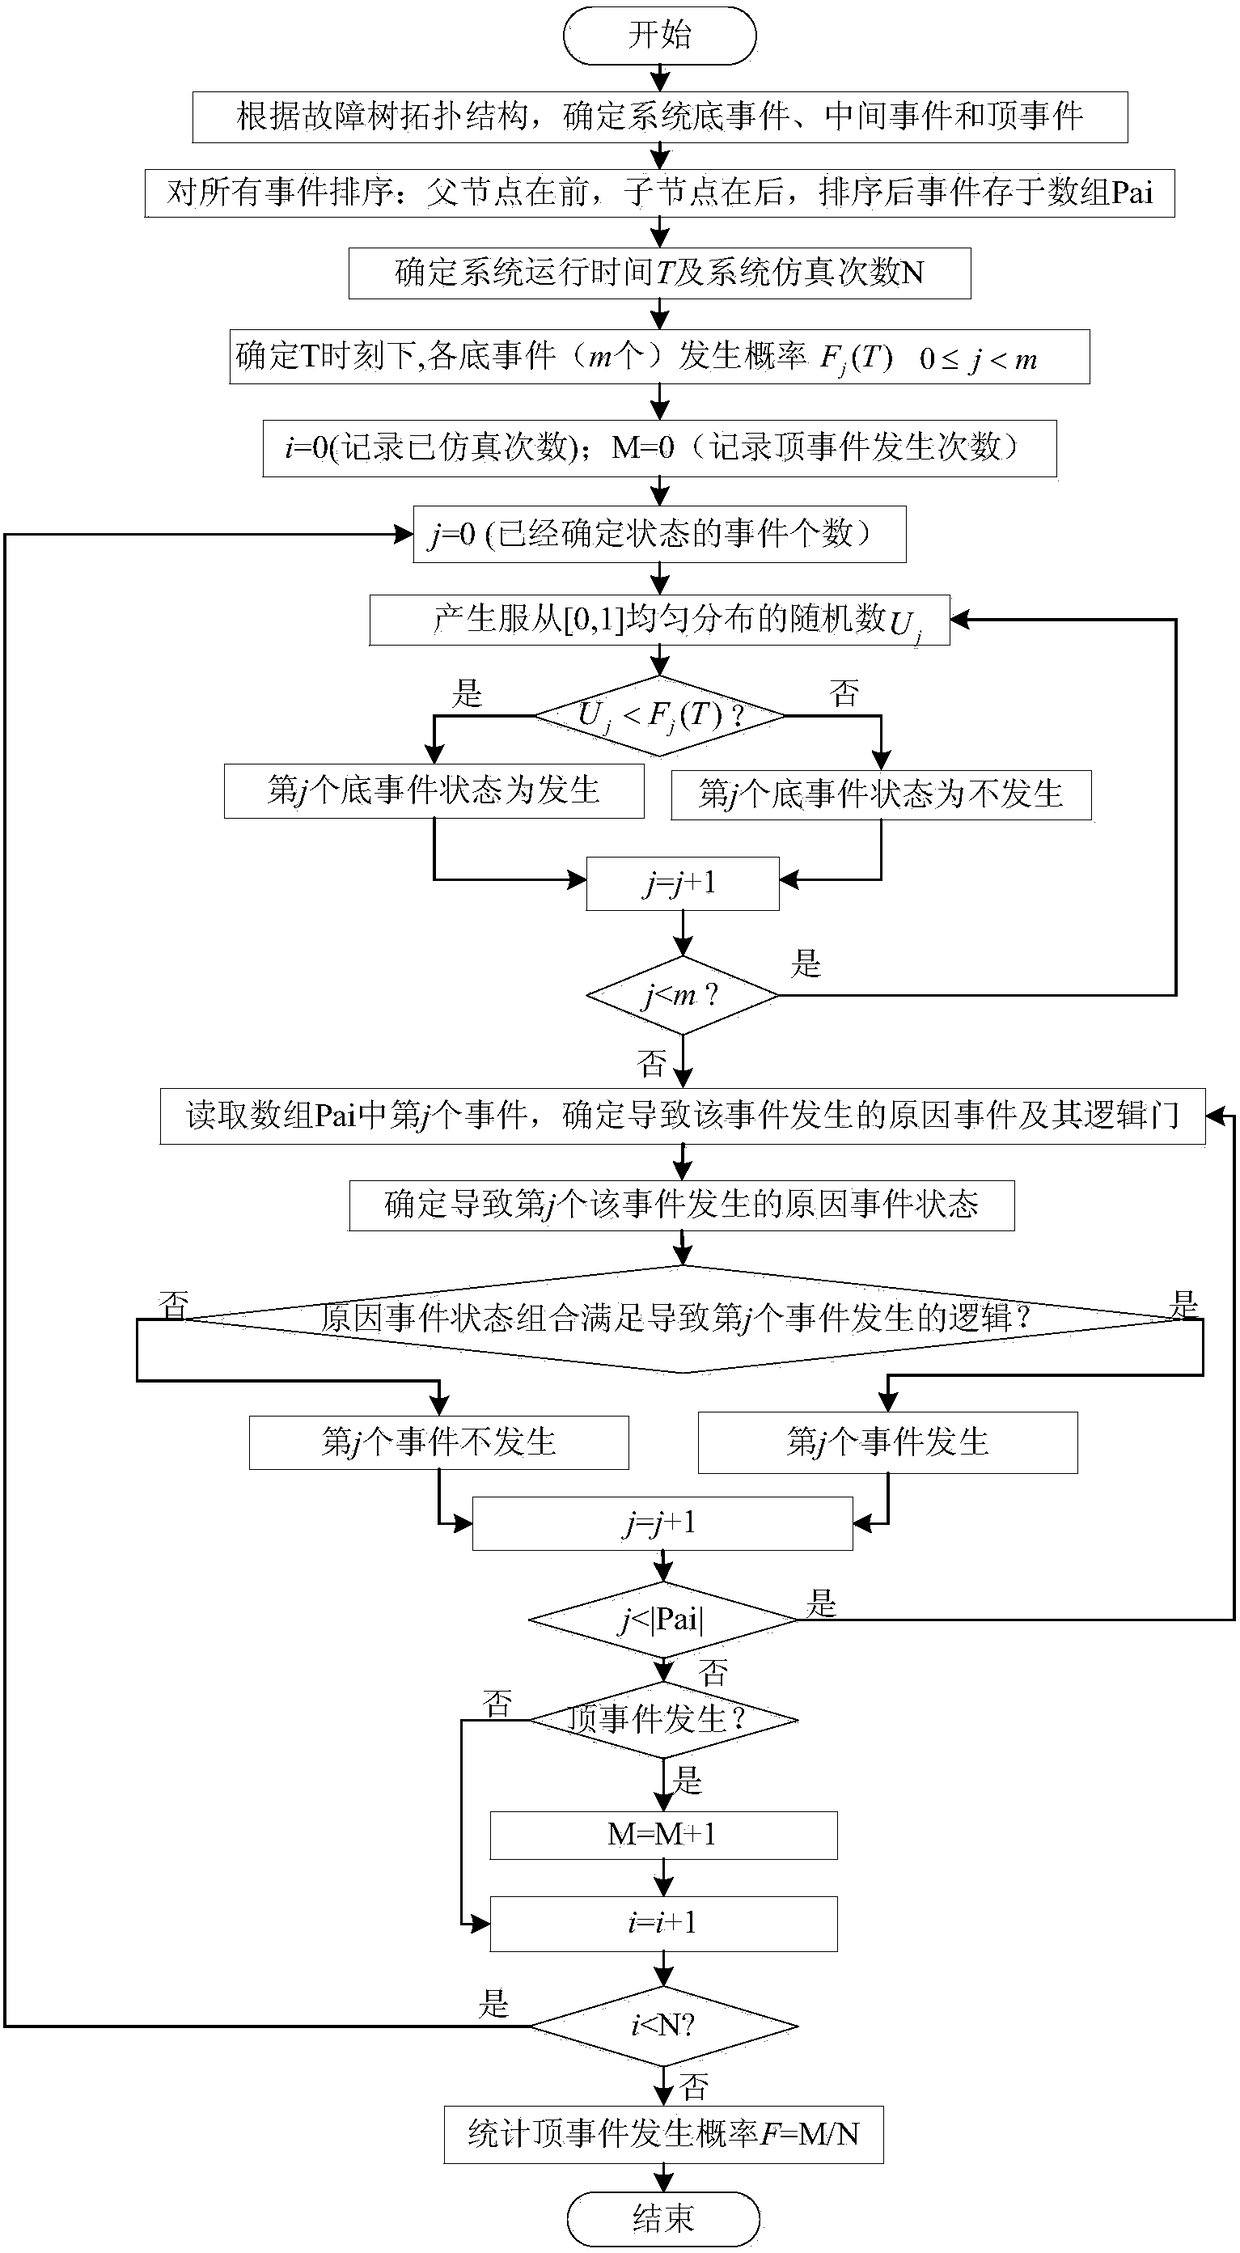 A Fault Tree Analysis Method Based on Monte Carlo Simulation